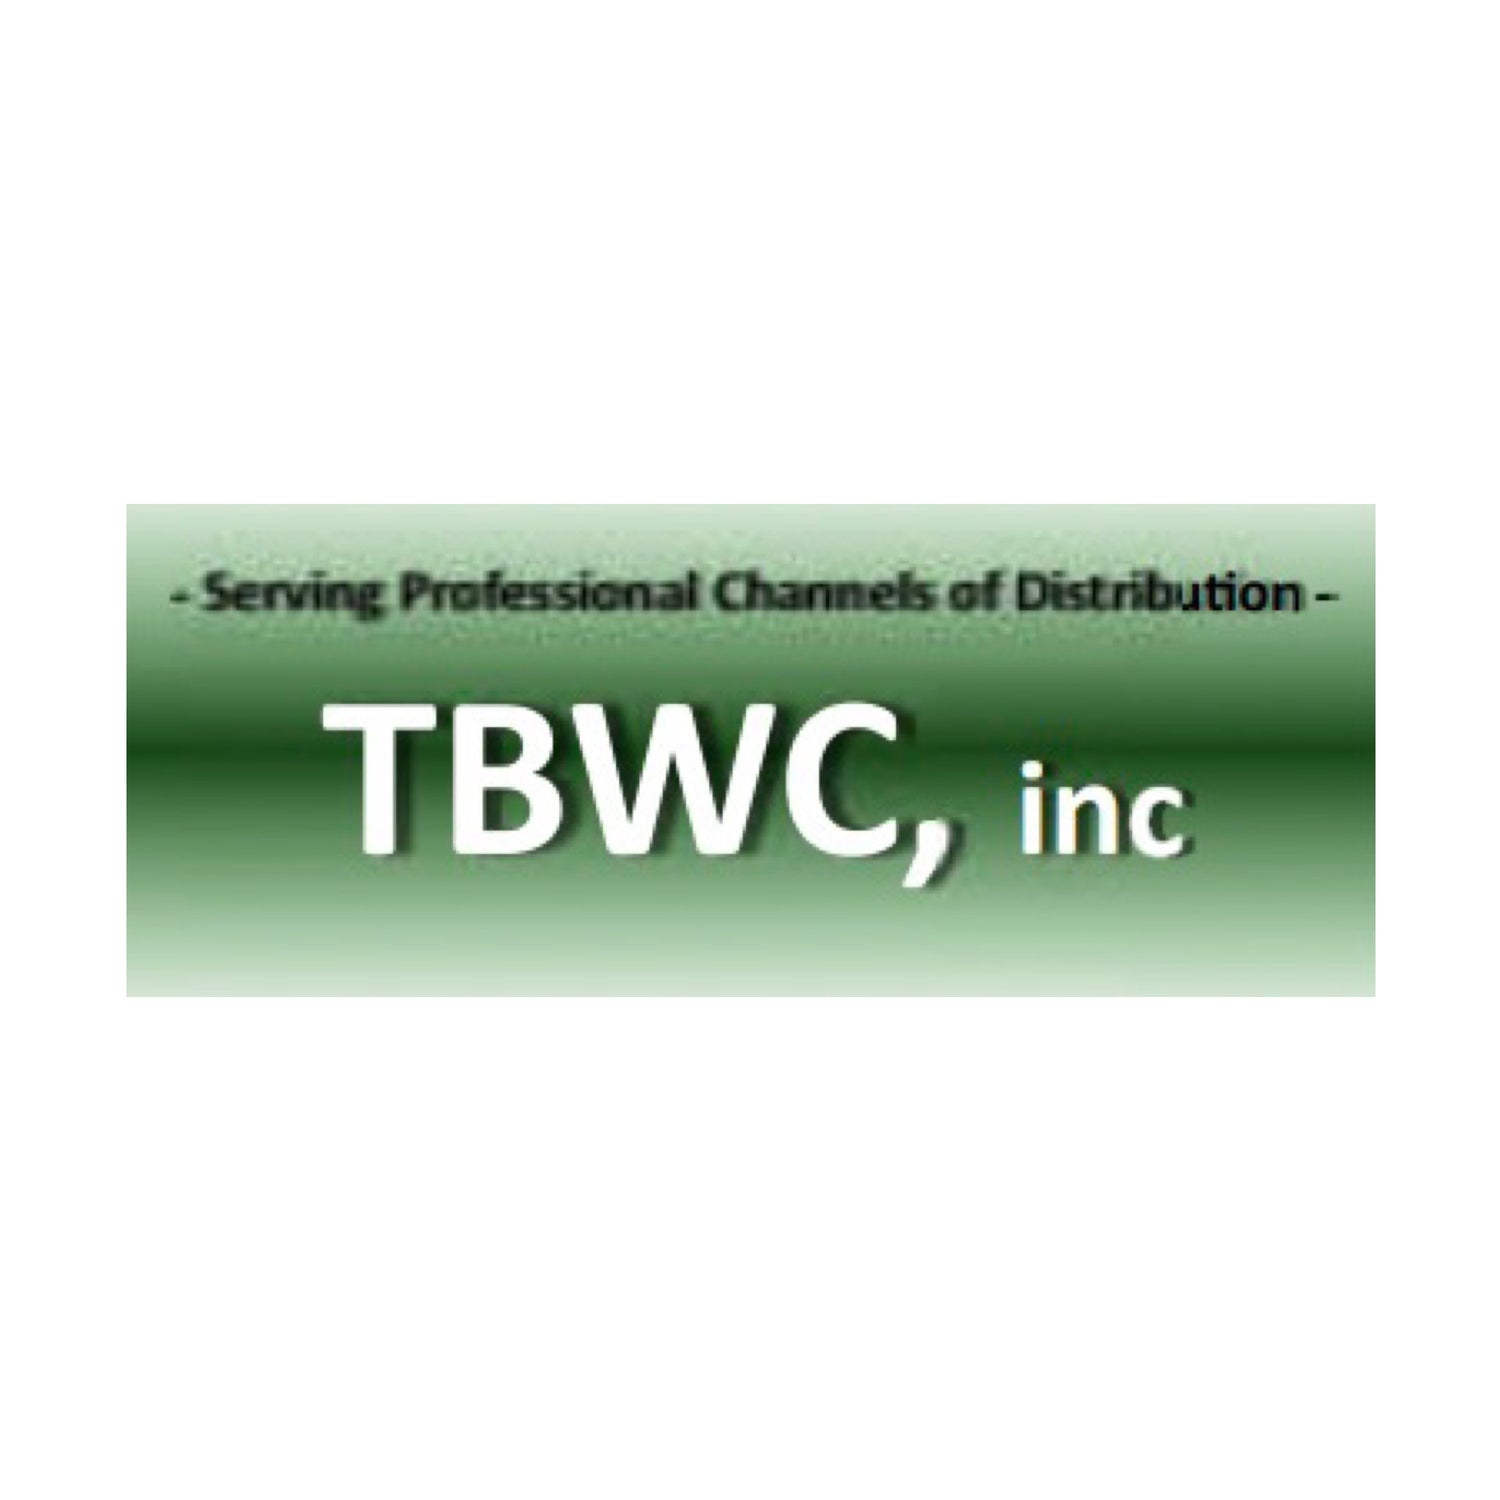 TBWC INC.